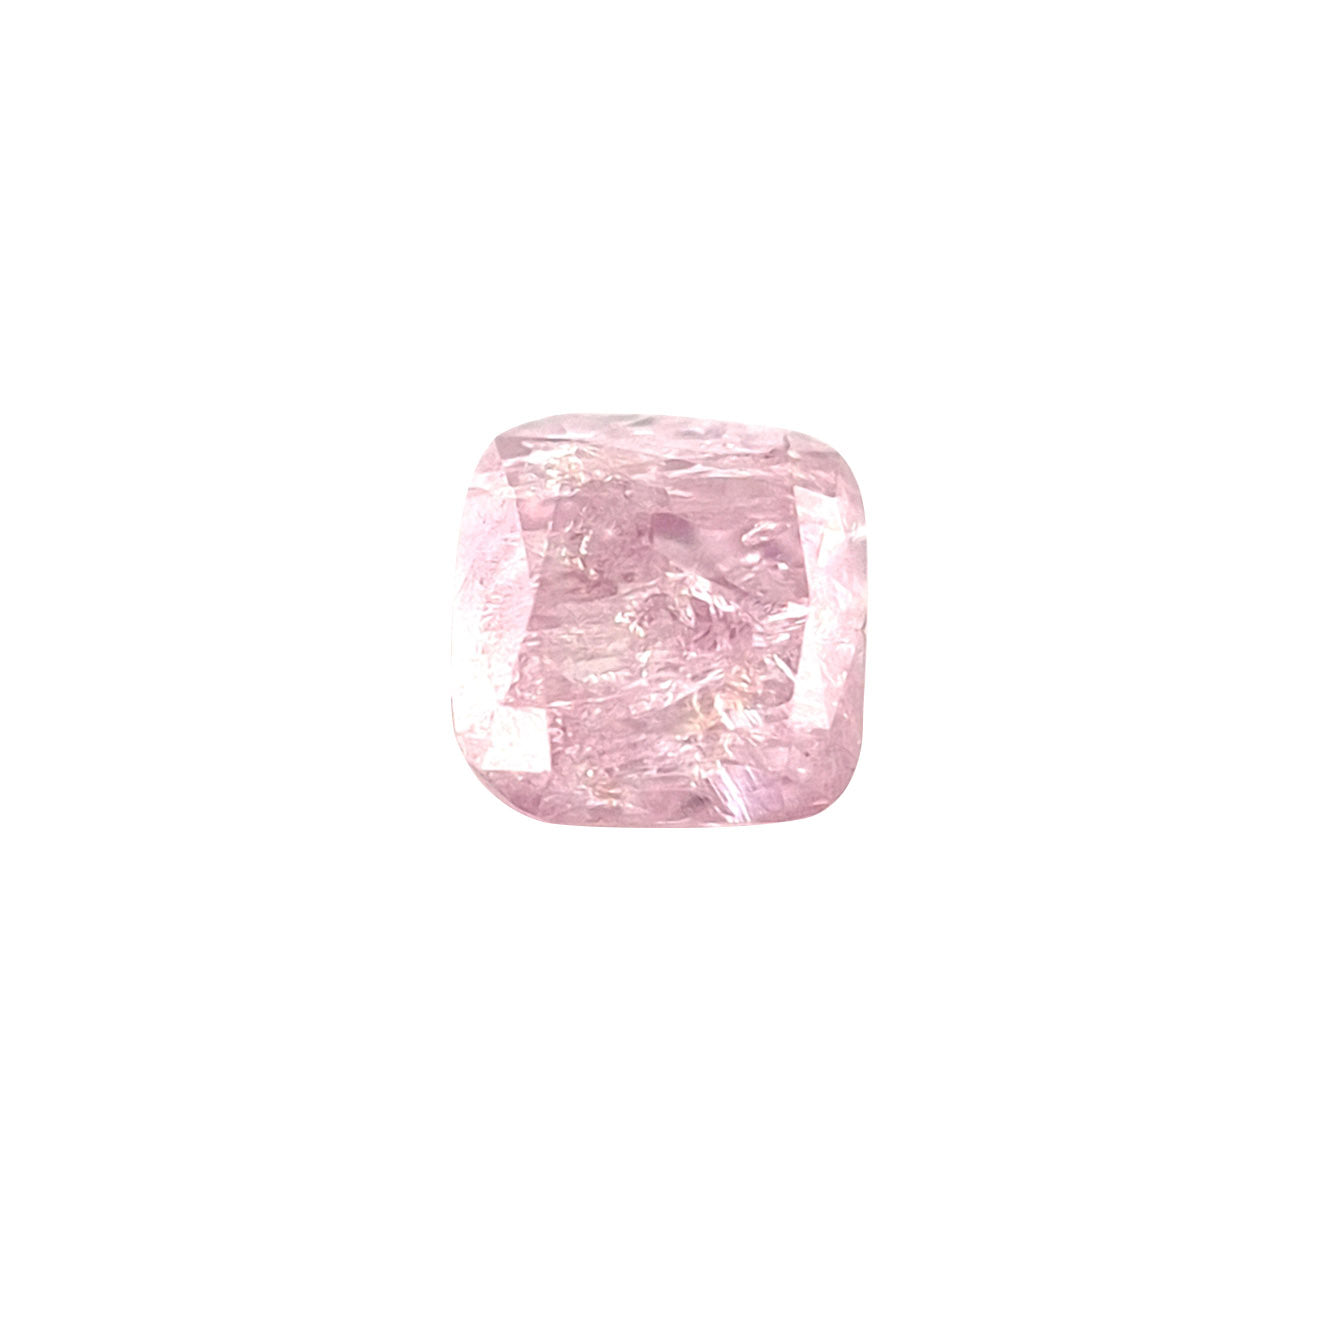 0.19ct Australian Argyle Pink Purple Snow Diamond - Cushion Cut